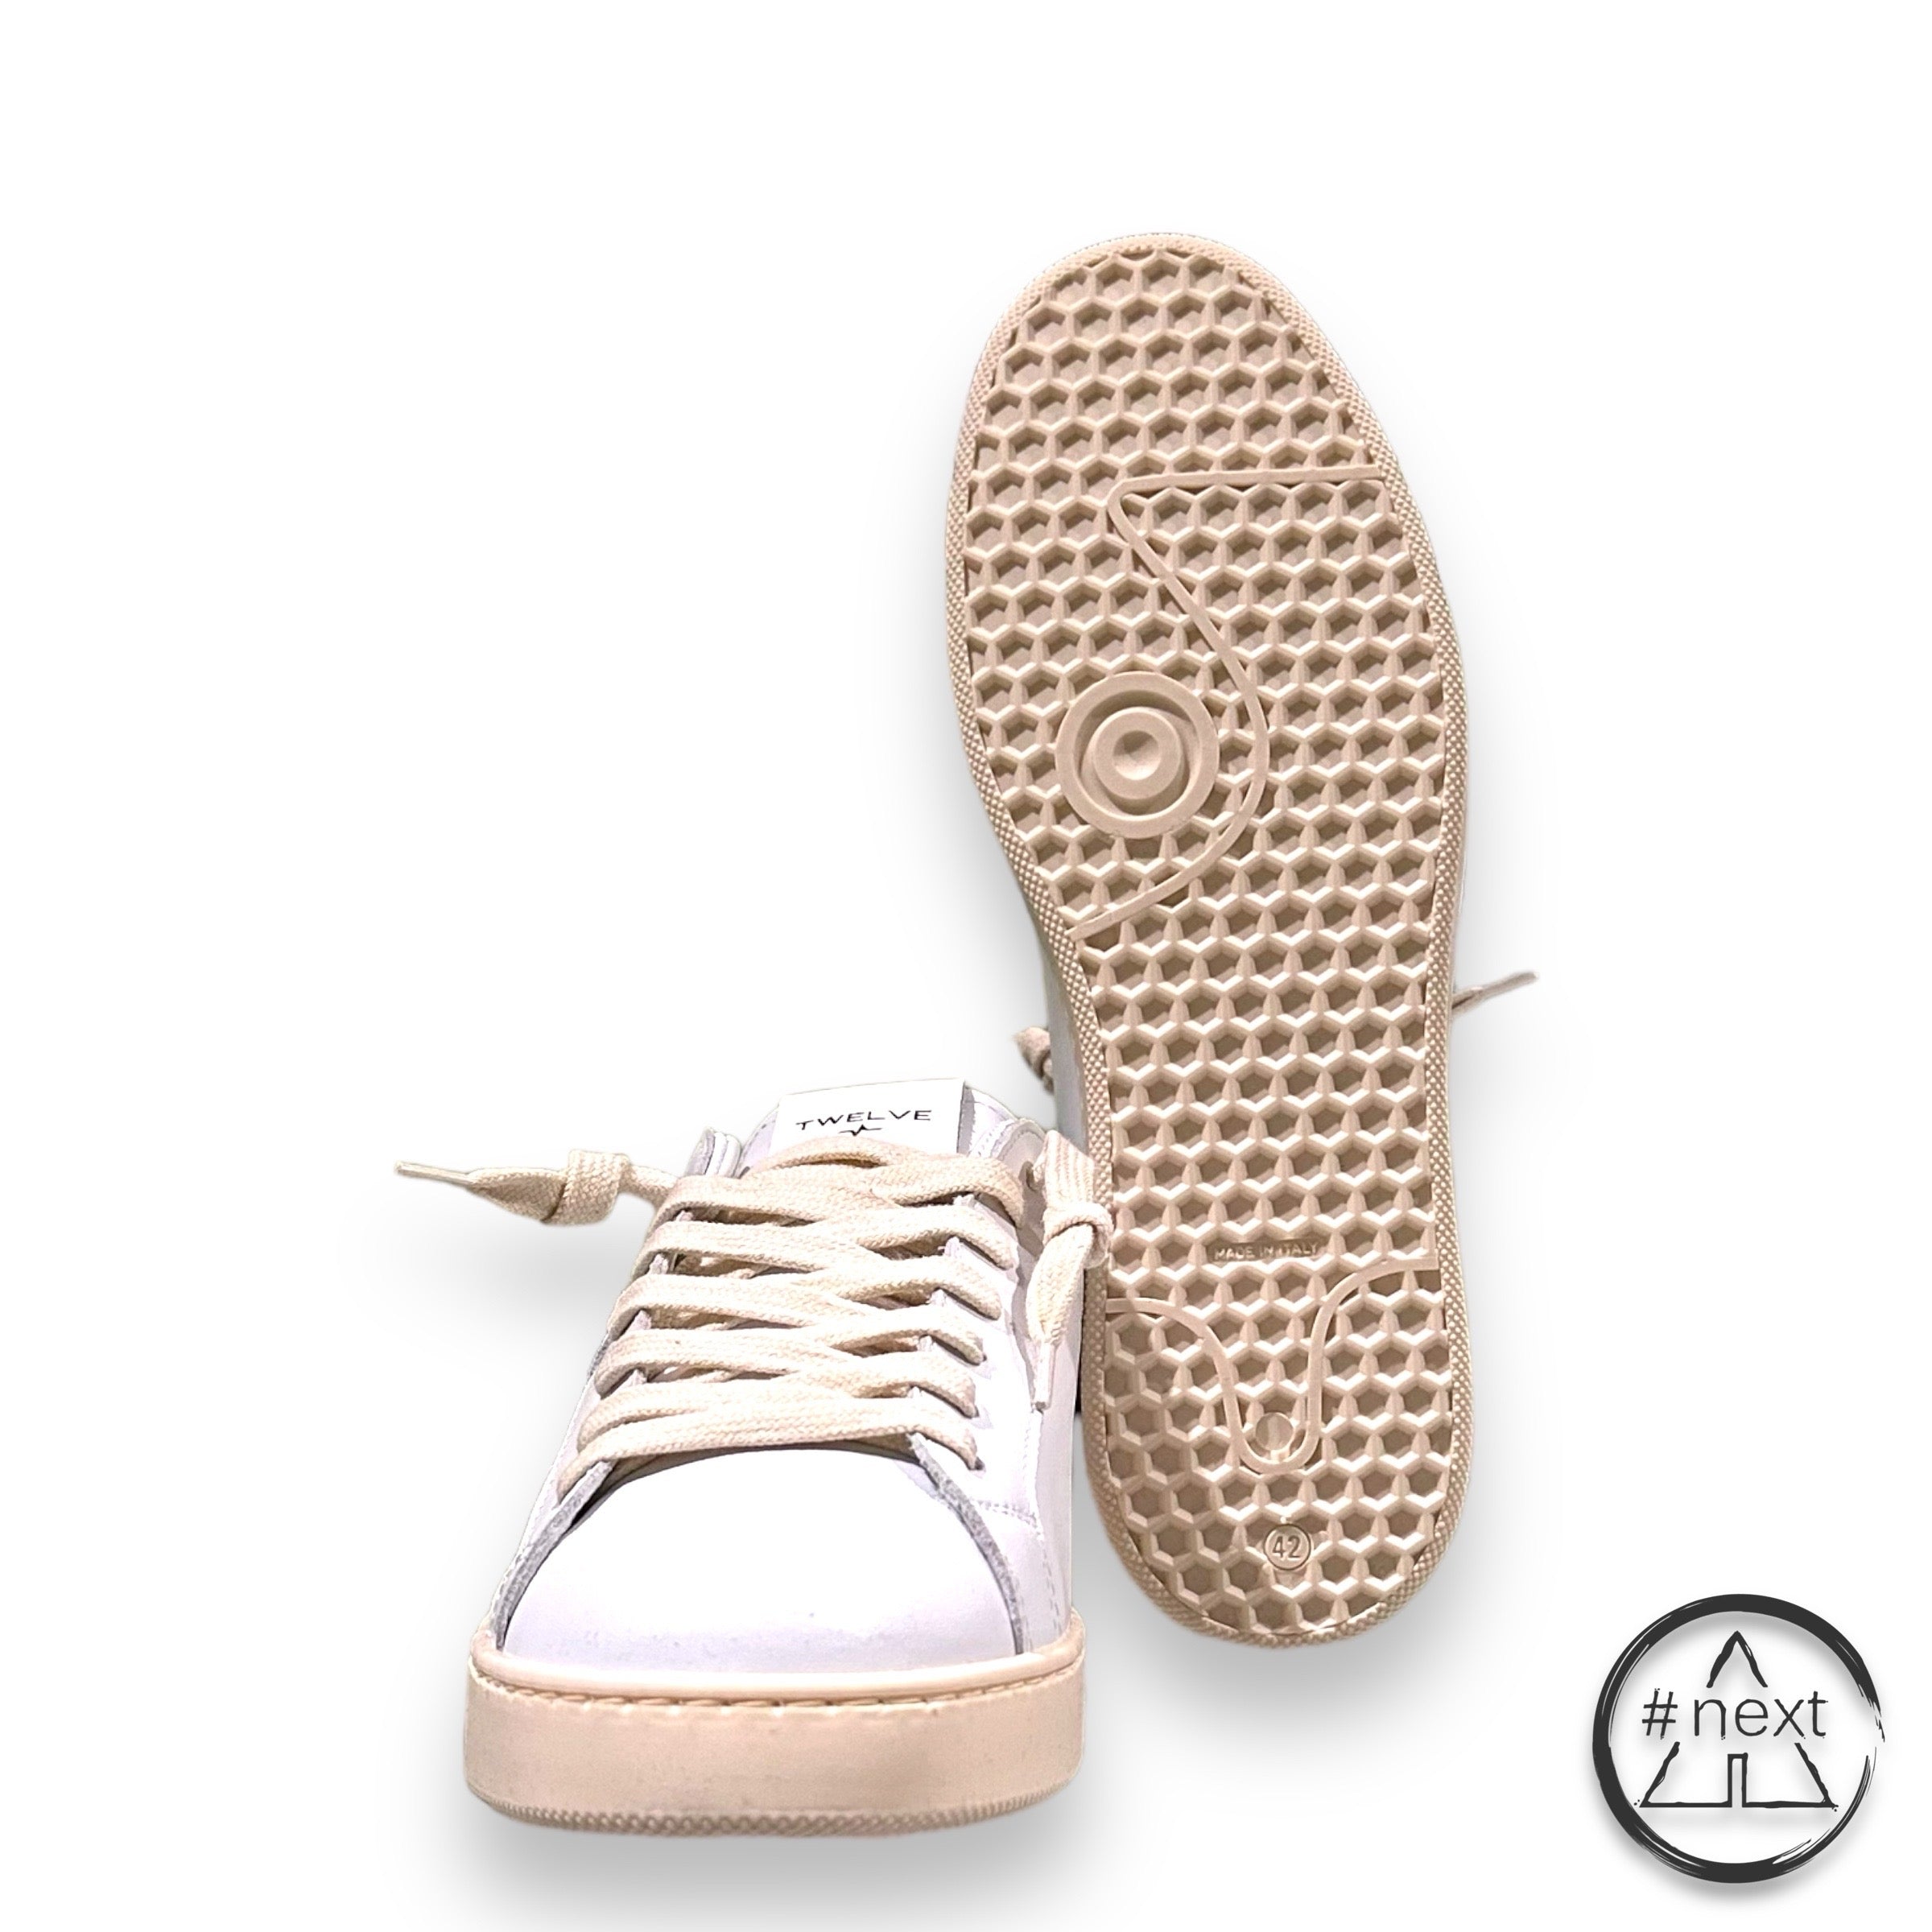 (#C) TWELVE - Sneakers CLASSIC - Bianco, Blu. - ANDY #NEXT